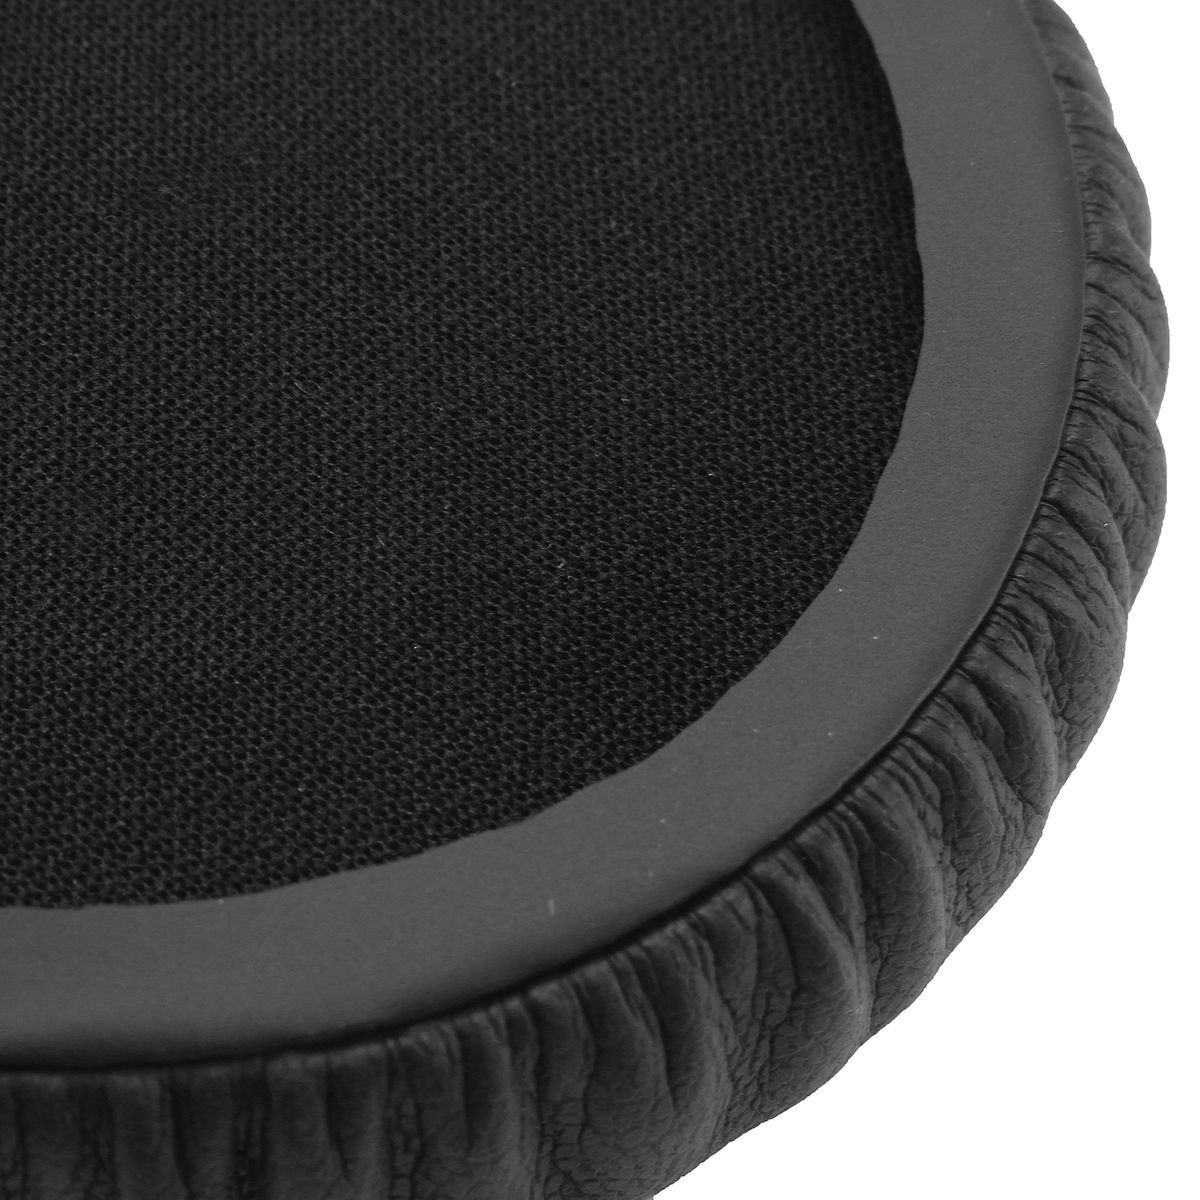 Replacement-Headphone-Earpads-Cushion-Cover-Fit-For-JBL-E40BT-E40-S400-S400BT-Headphones-1366317